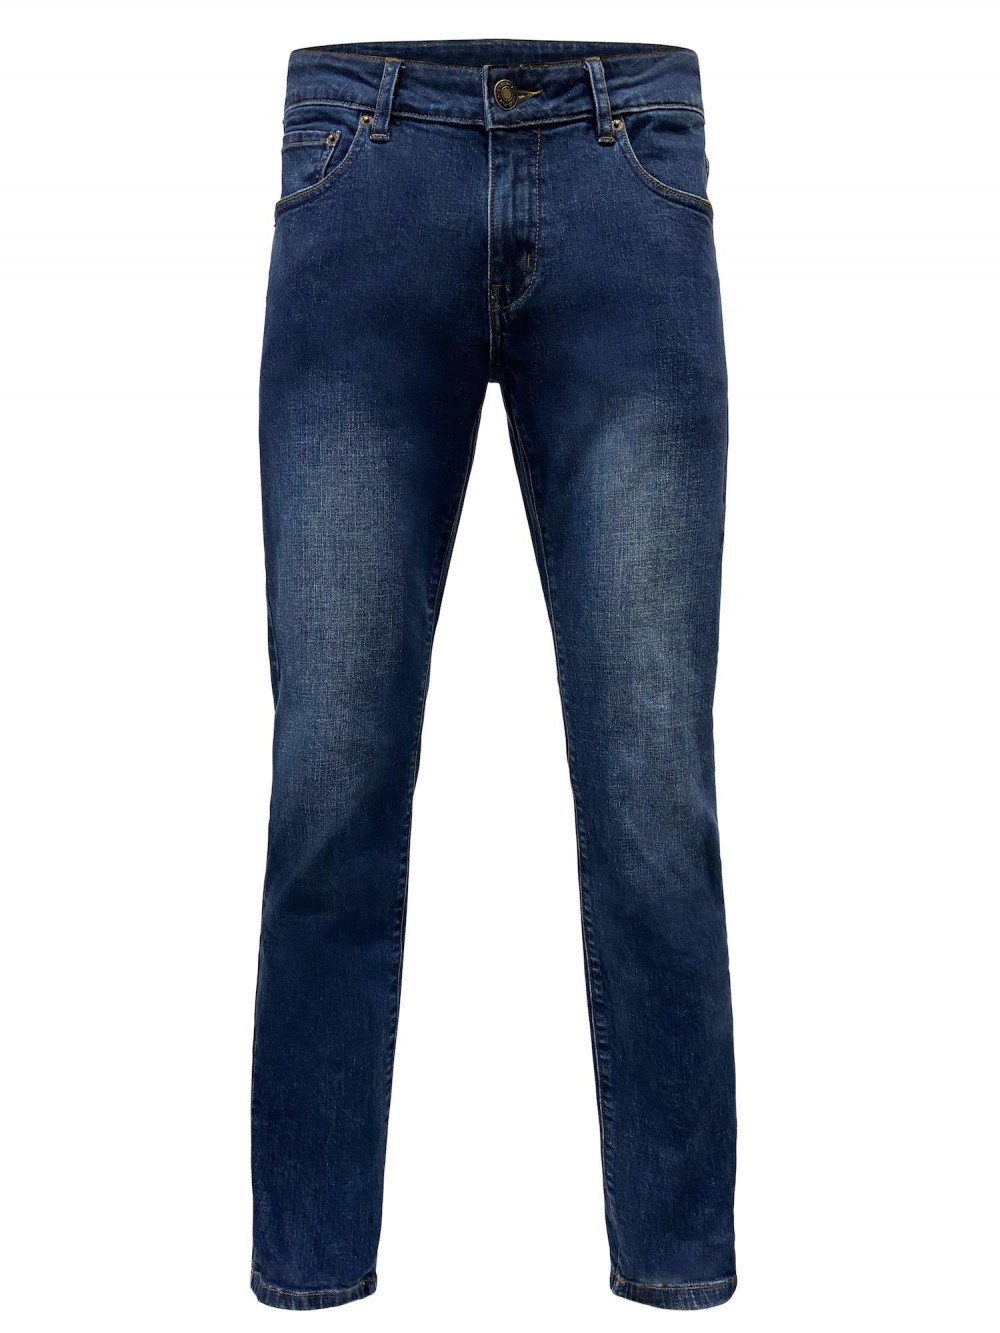 Jeans JSM316 stretch slim fit - dr.blue